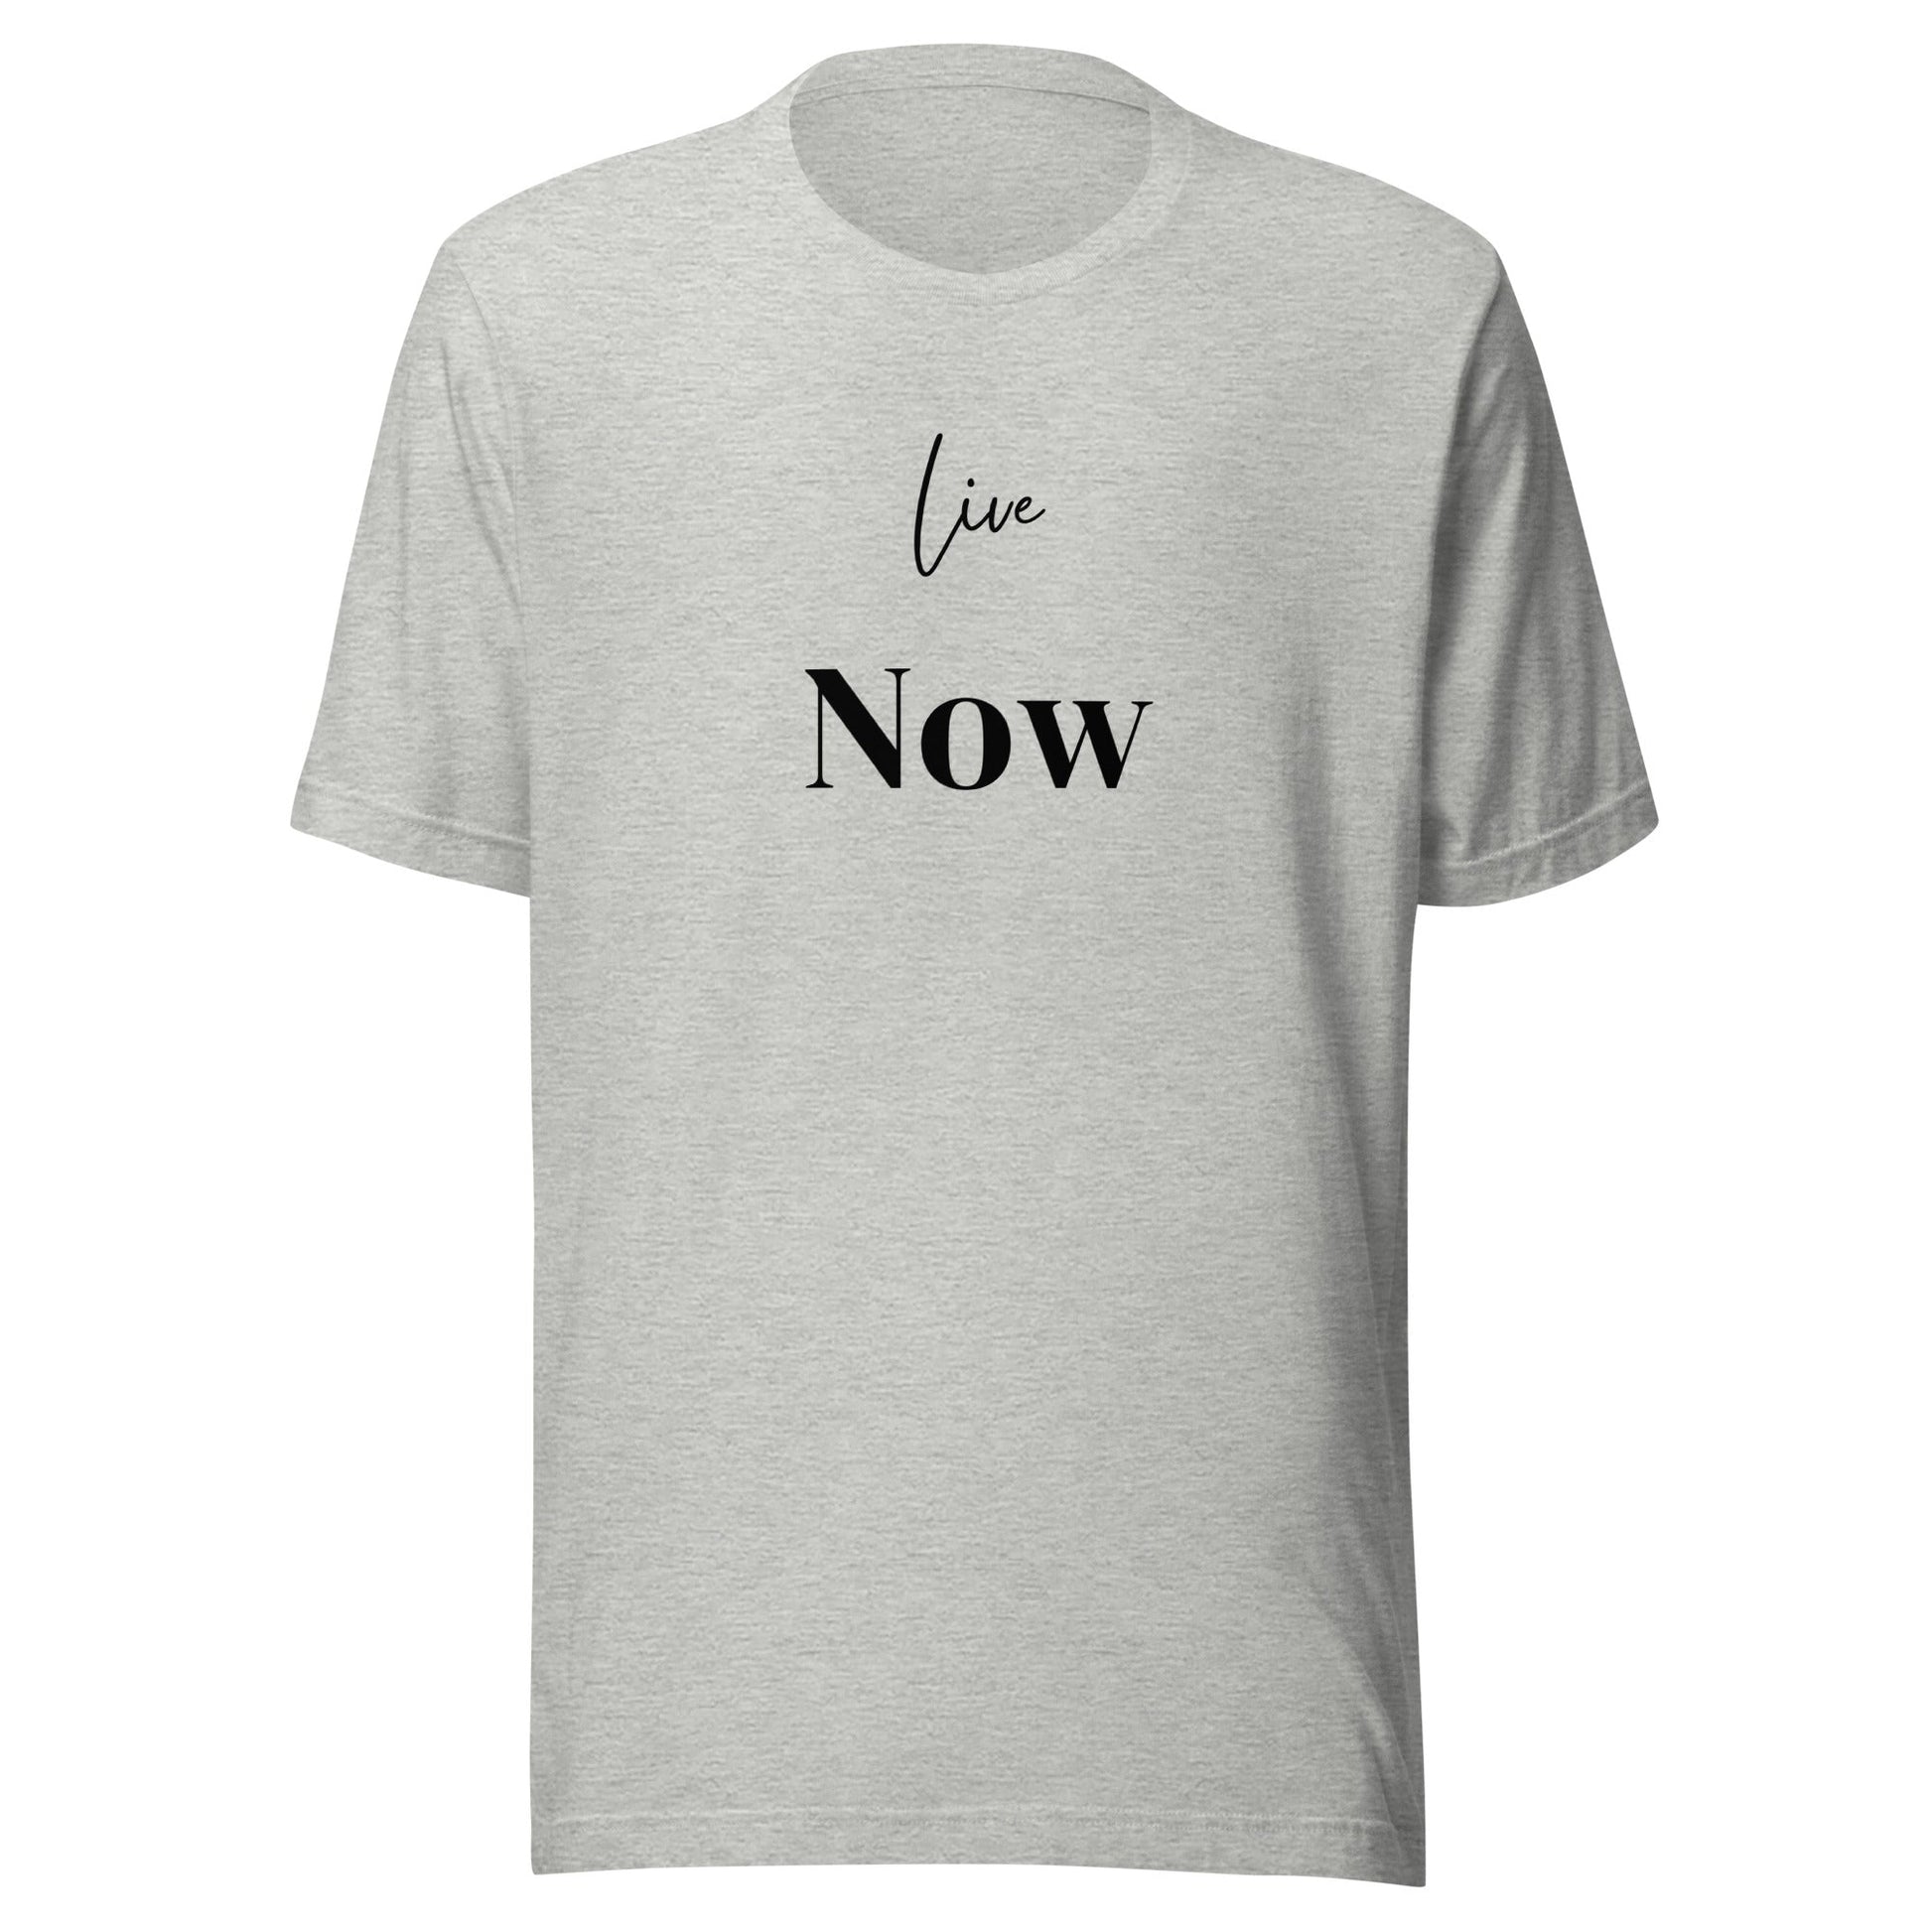 Live Now - Unisex t-shirt - lilaloop - T-shirt